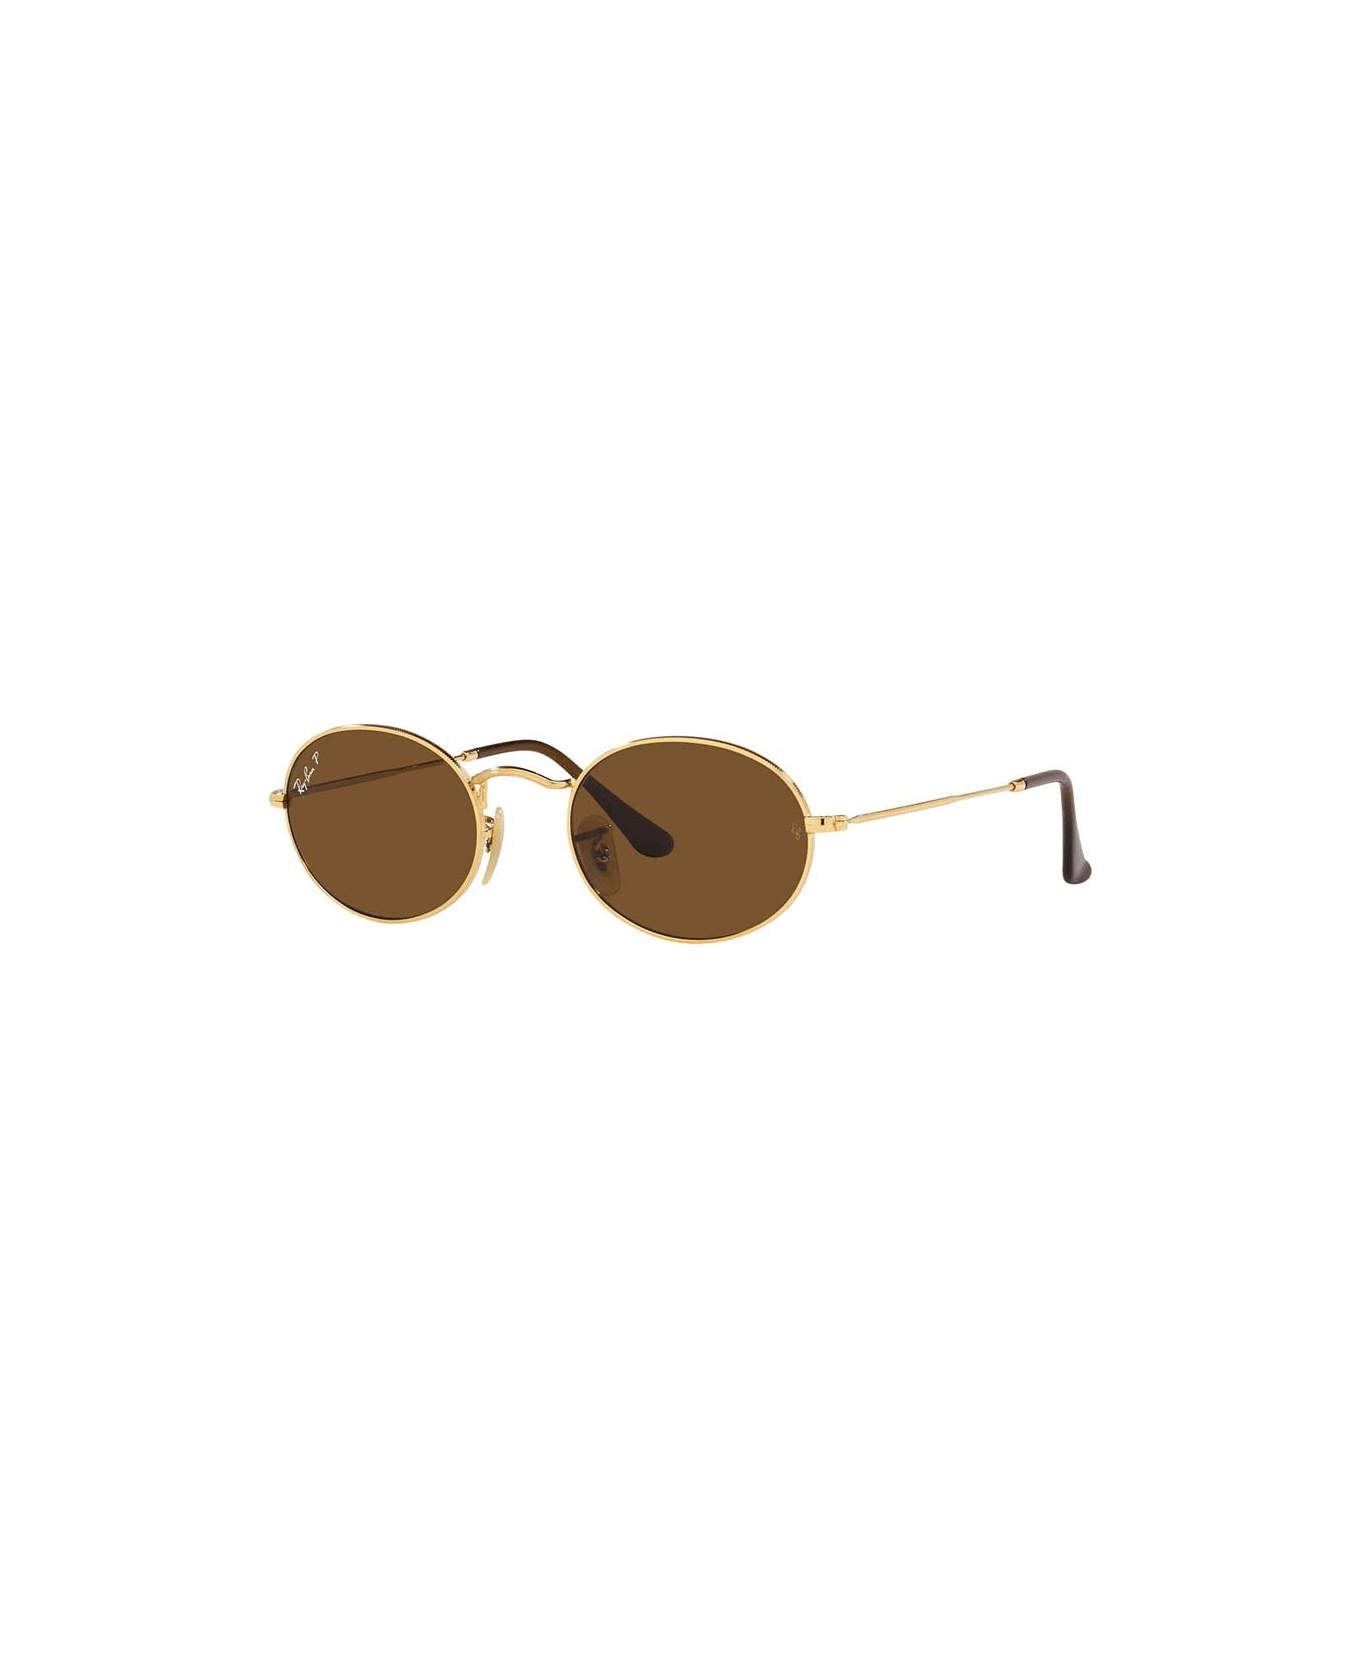 Ray-Ban Sunglasses - Oro/Marrone